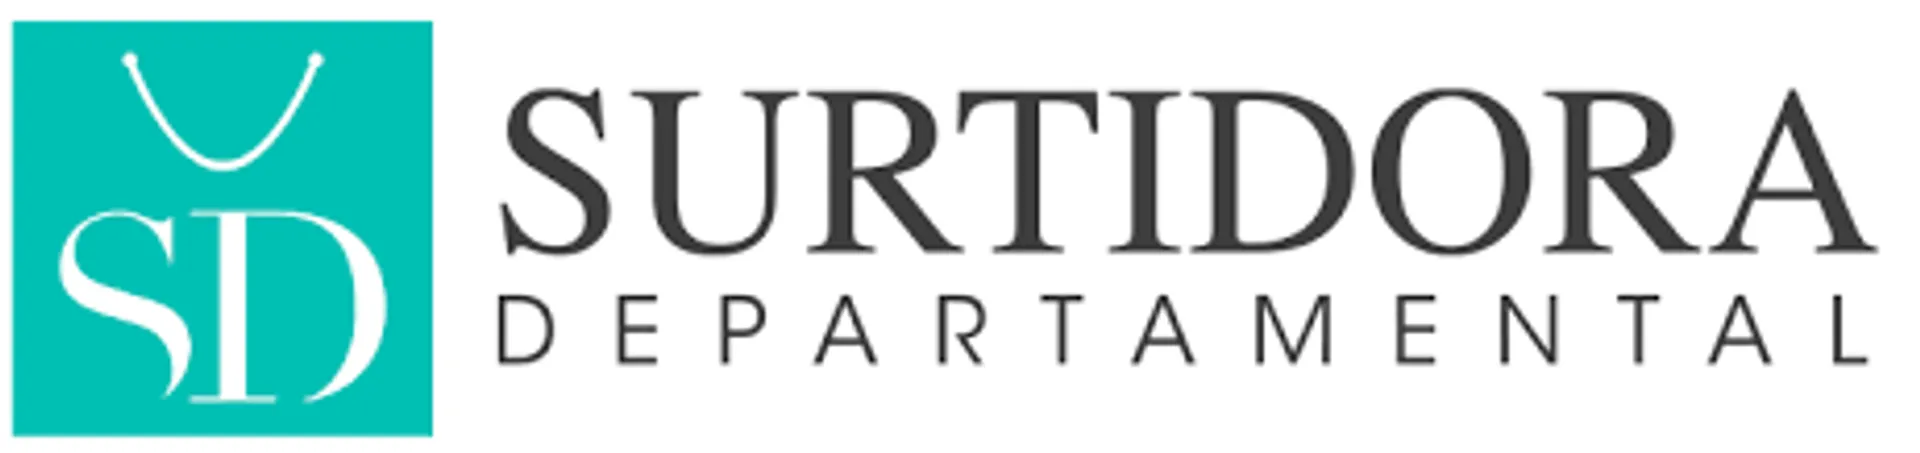 SURTIDORA DEPARTAMENTAL logo